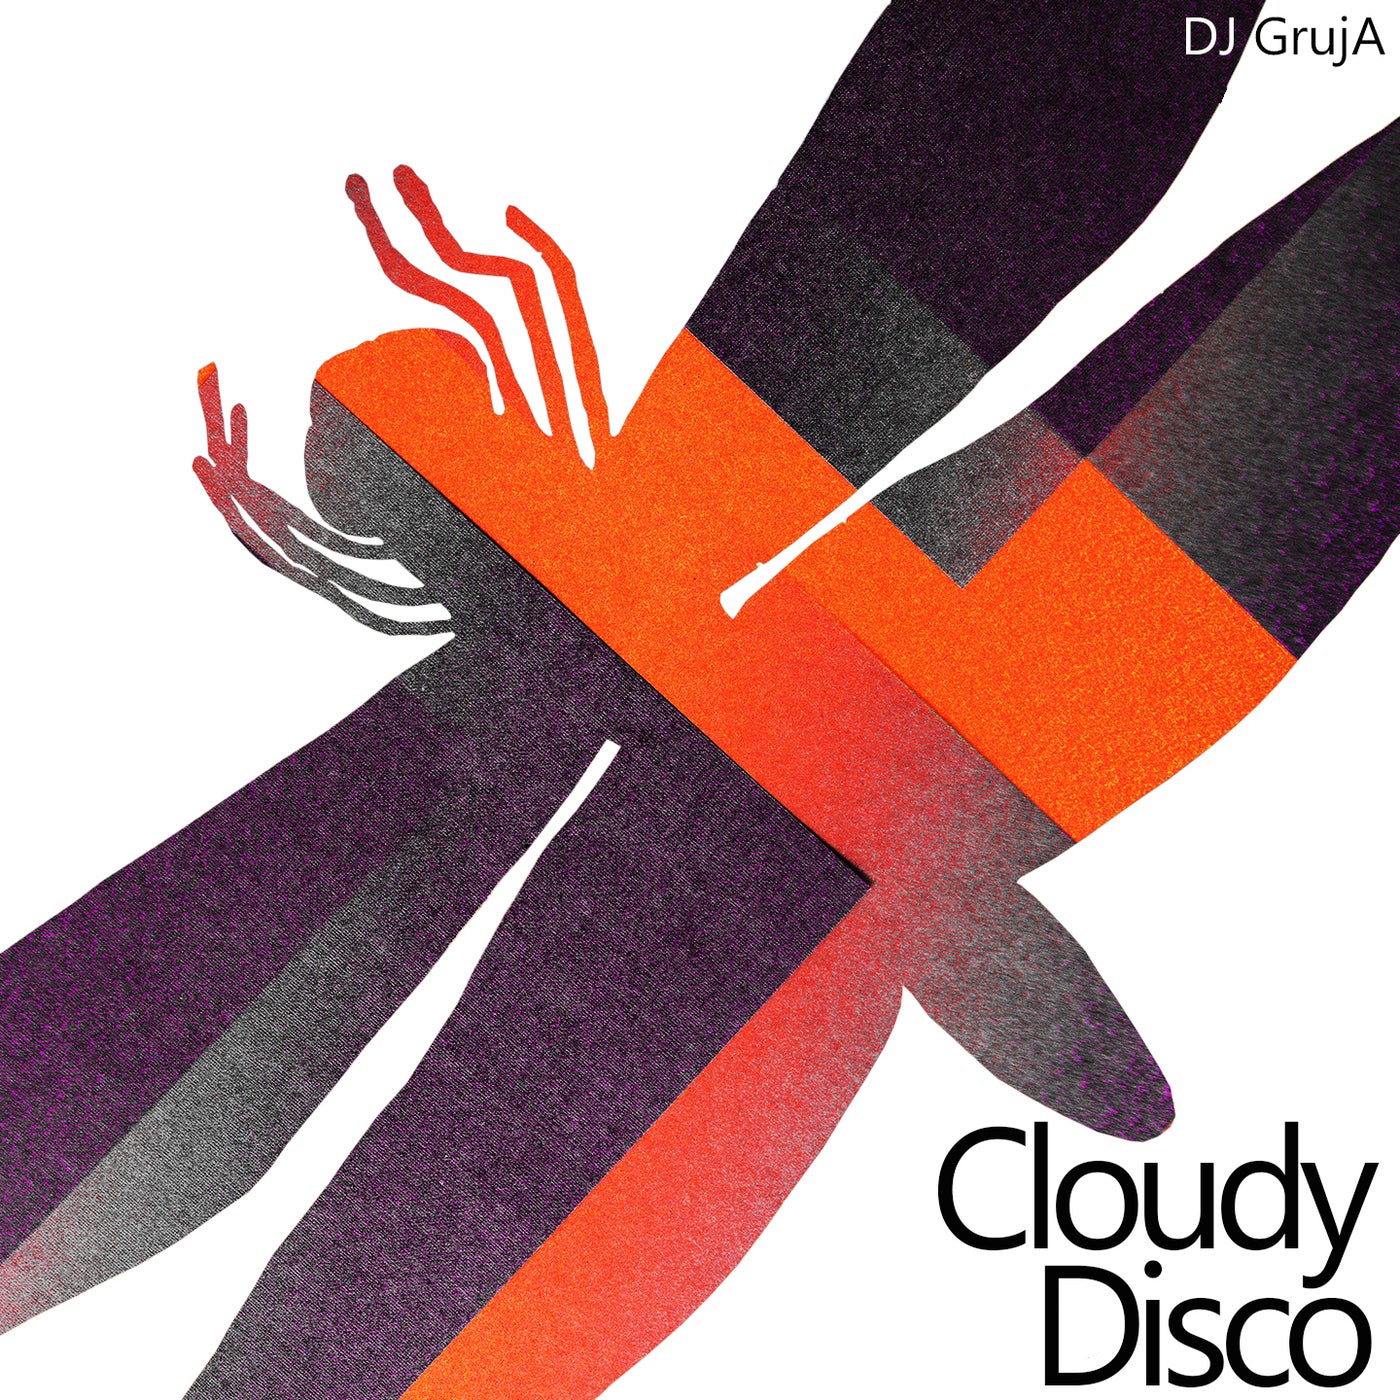 Cloudy Disco